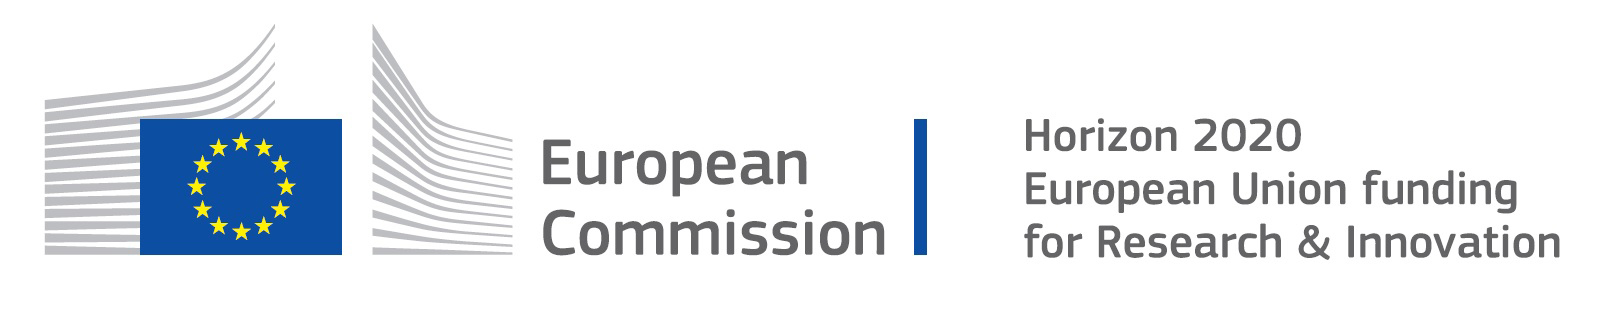 H2020 Commissione Europea